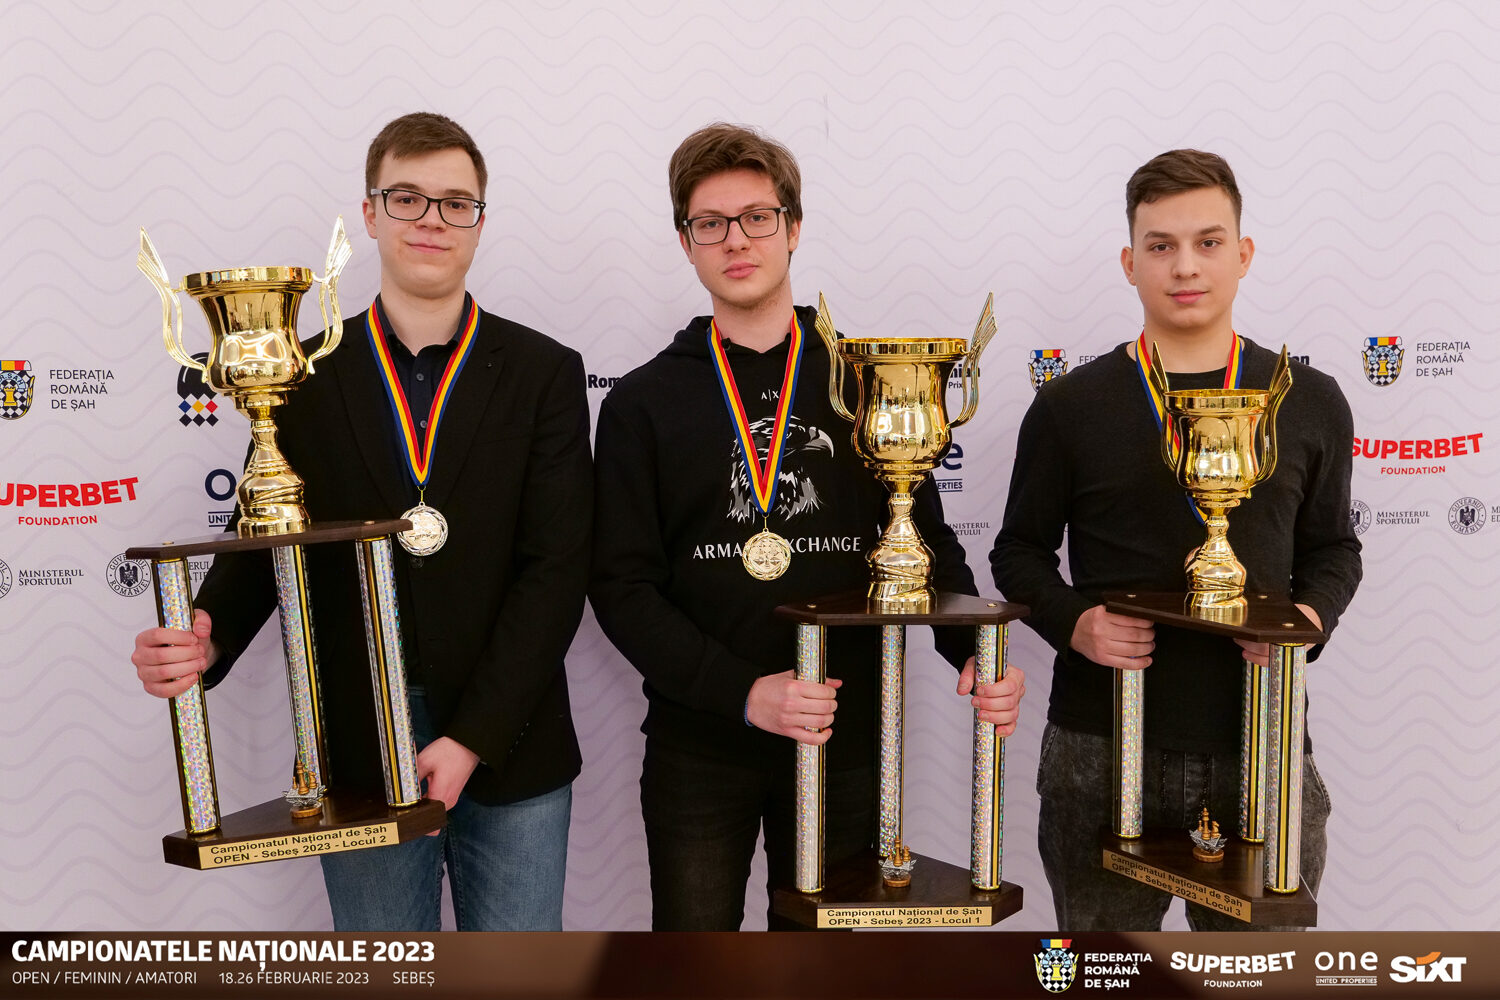 kiril-shevchenko-a-cucerit-aurul-la-campionatul-national-de-sah